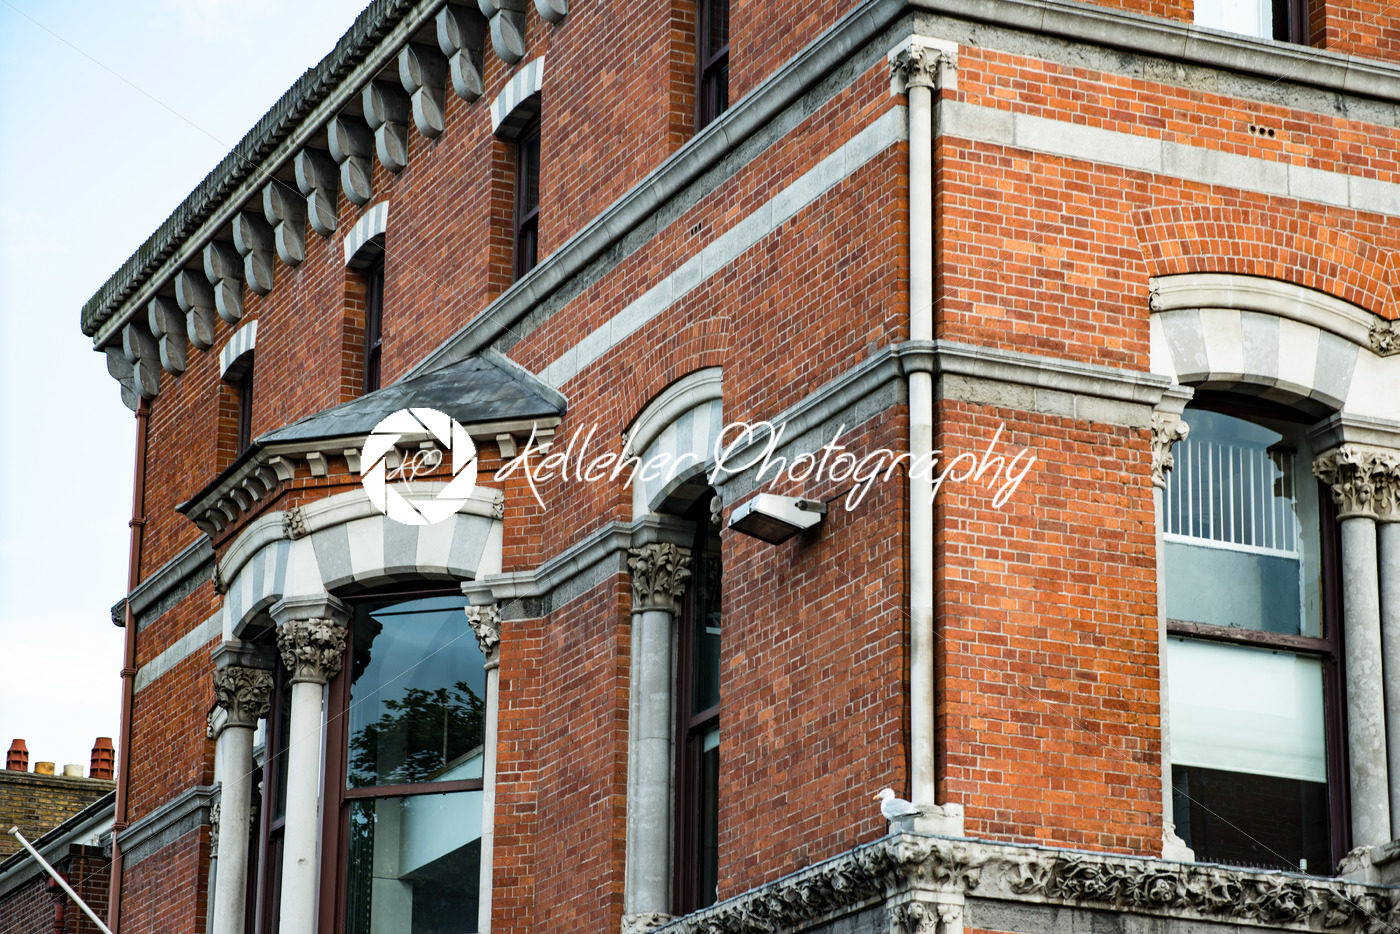 DUBLIN, IRELAND – AUGUST 30, 2017: City of Dublin Ireland - Kelleher Photography Store